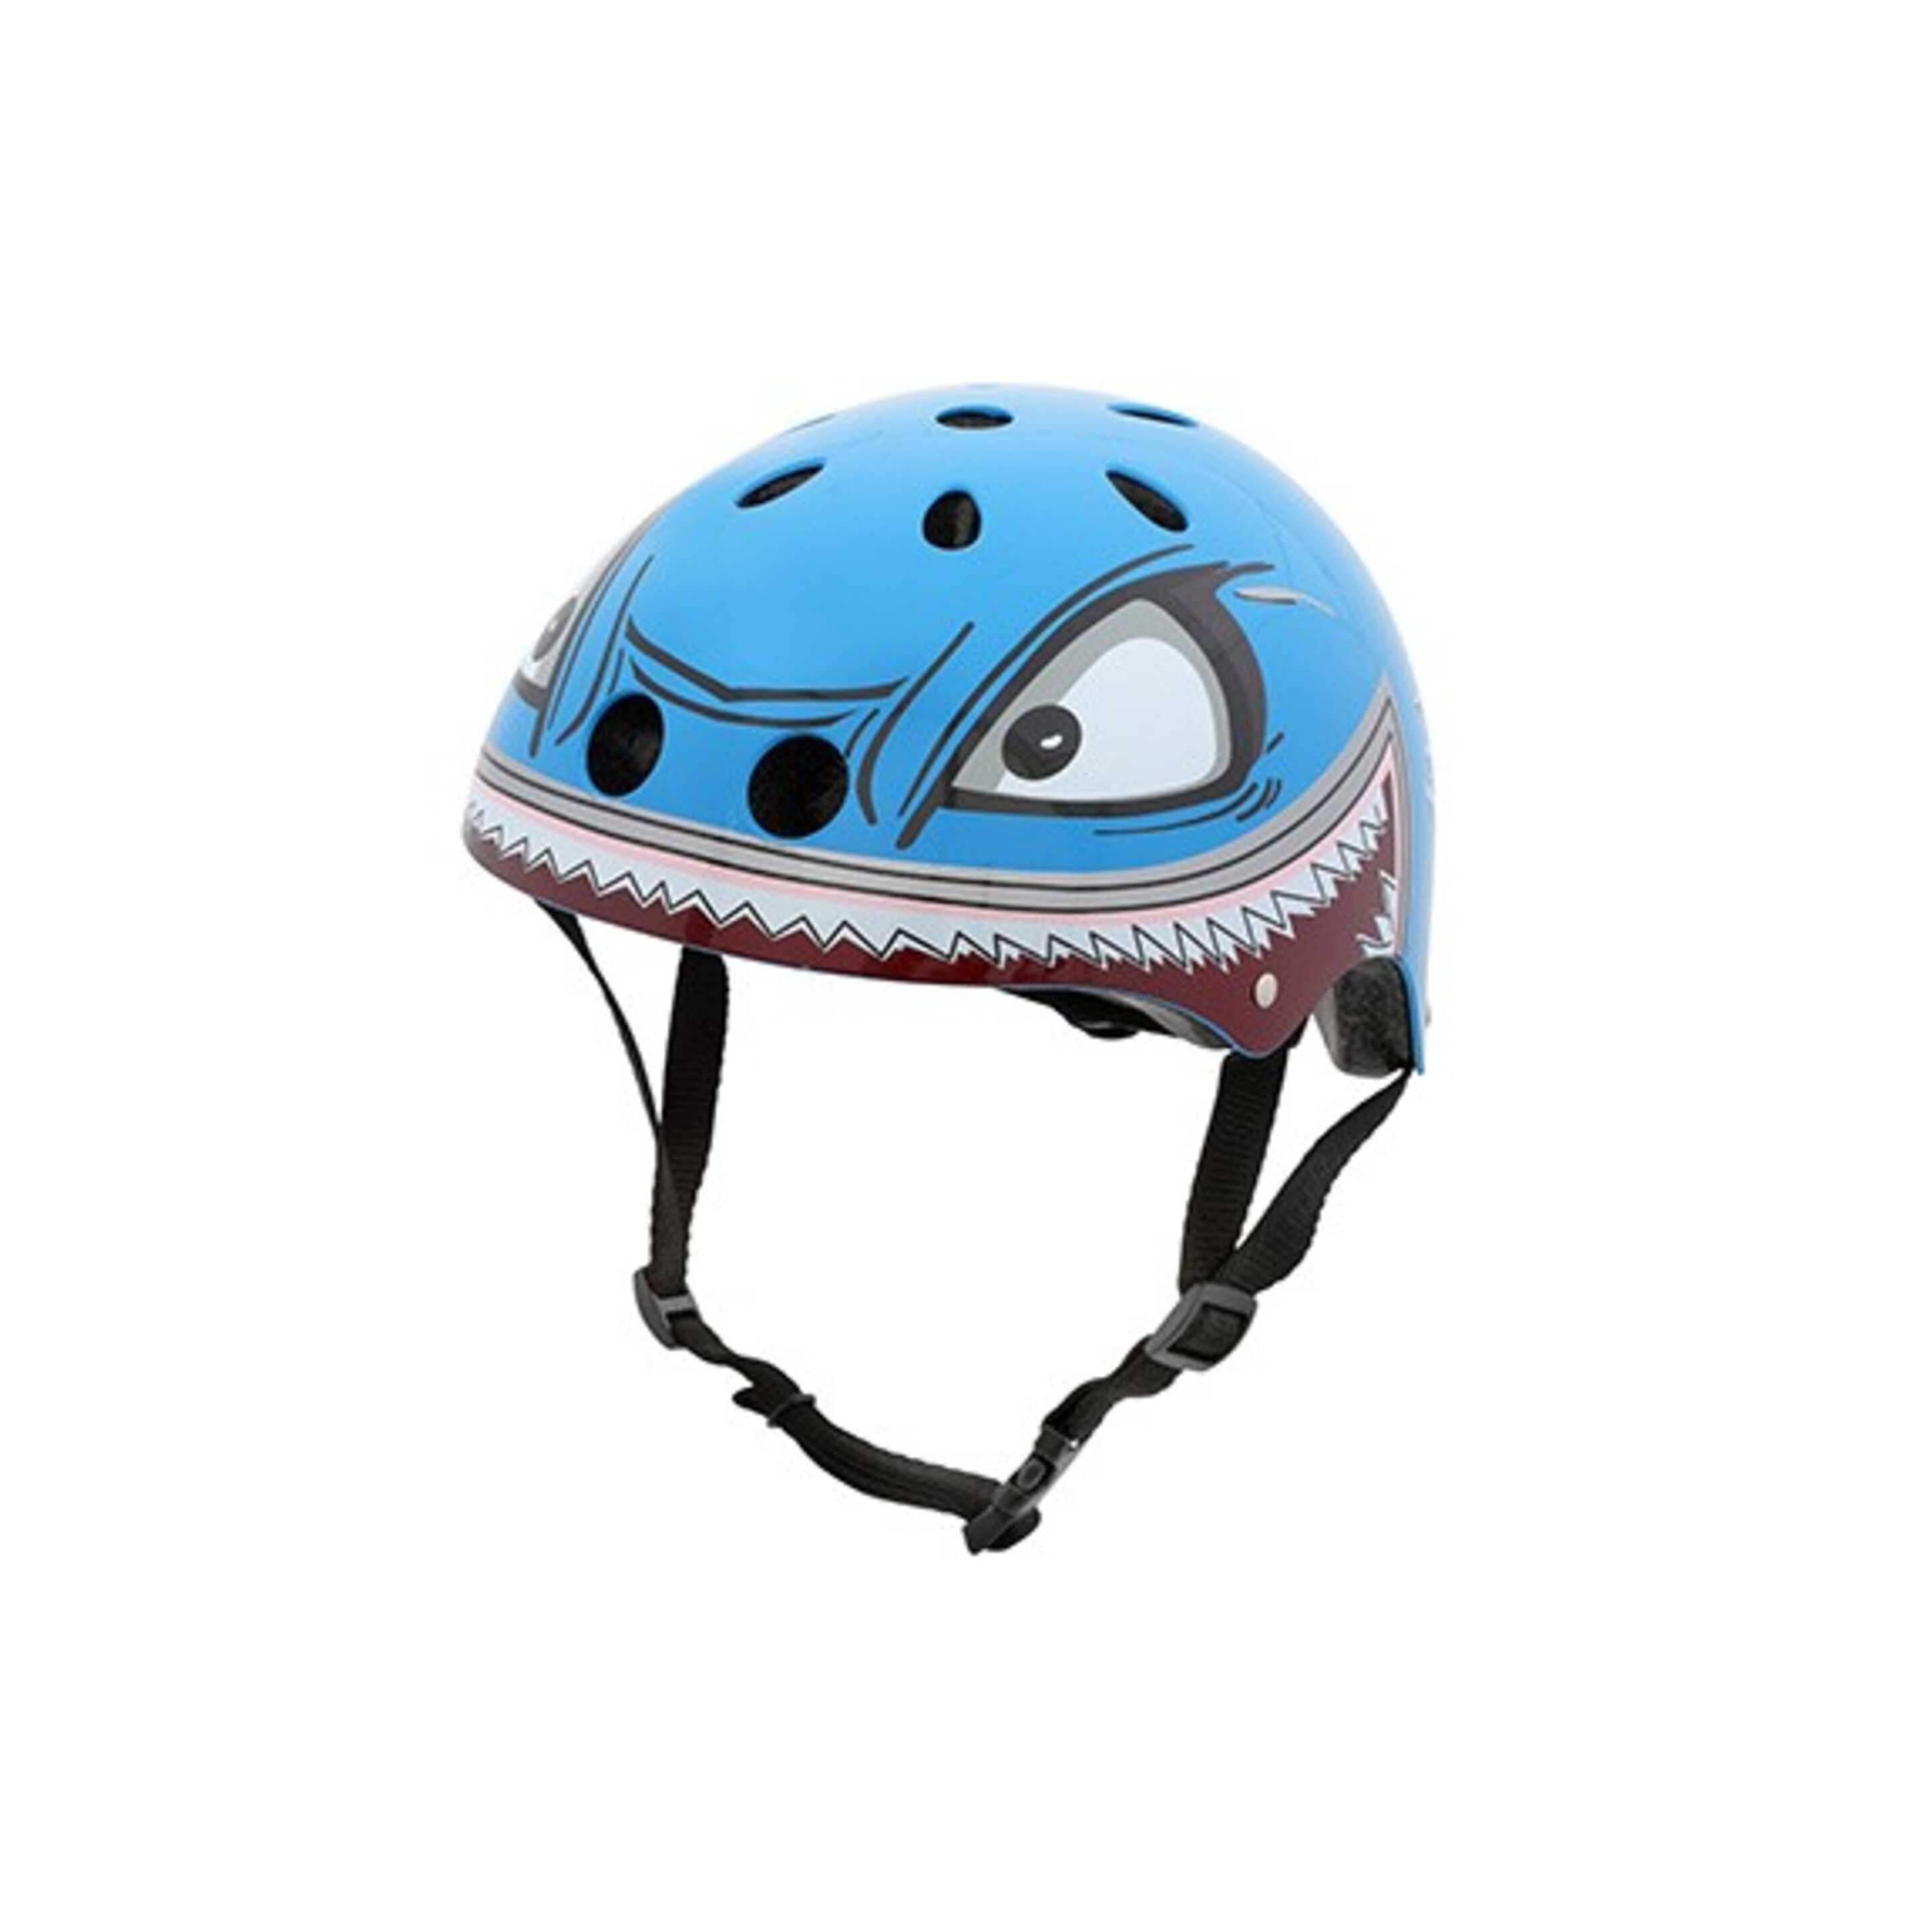 Mini Capacete De Bicicleta Hornit Lids Hammerhead - azul - 